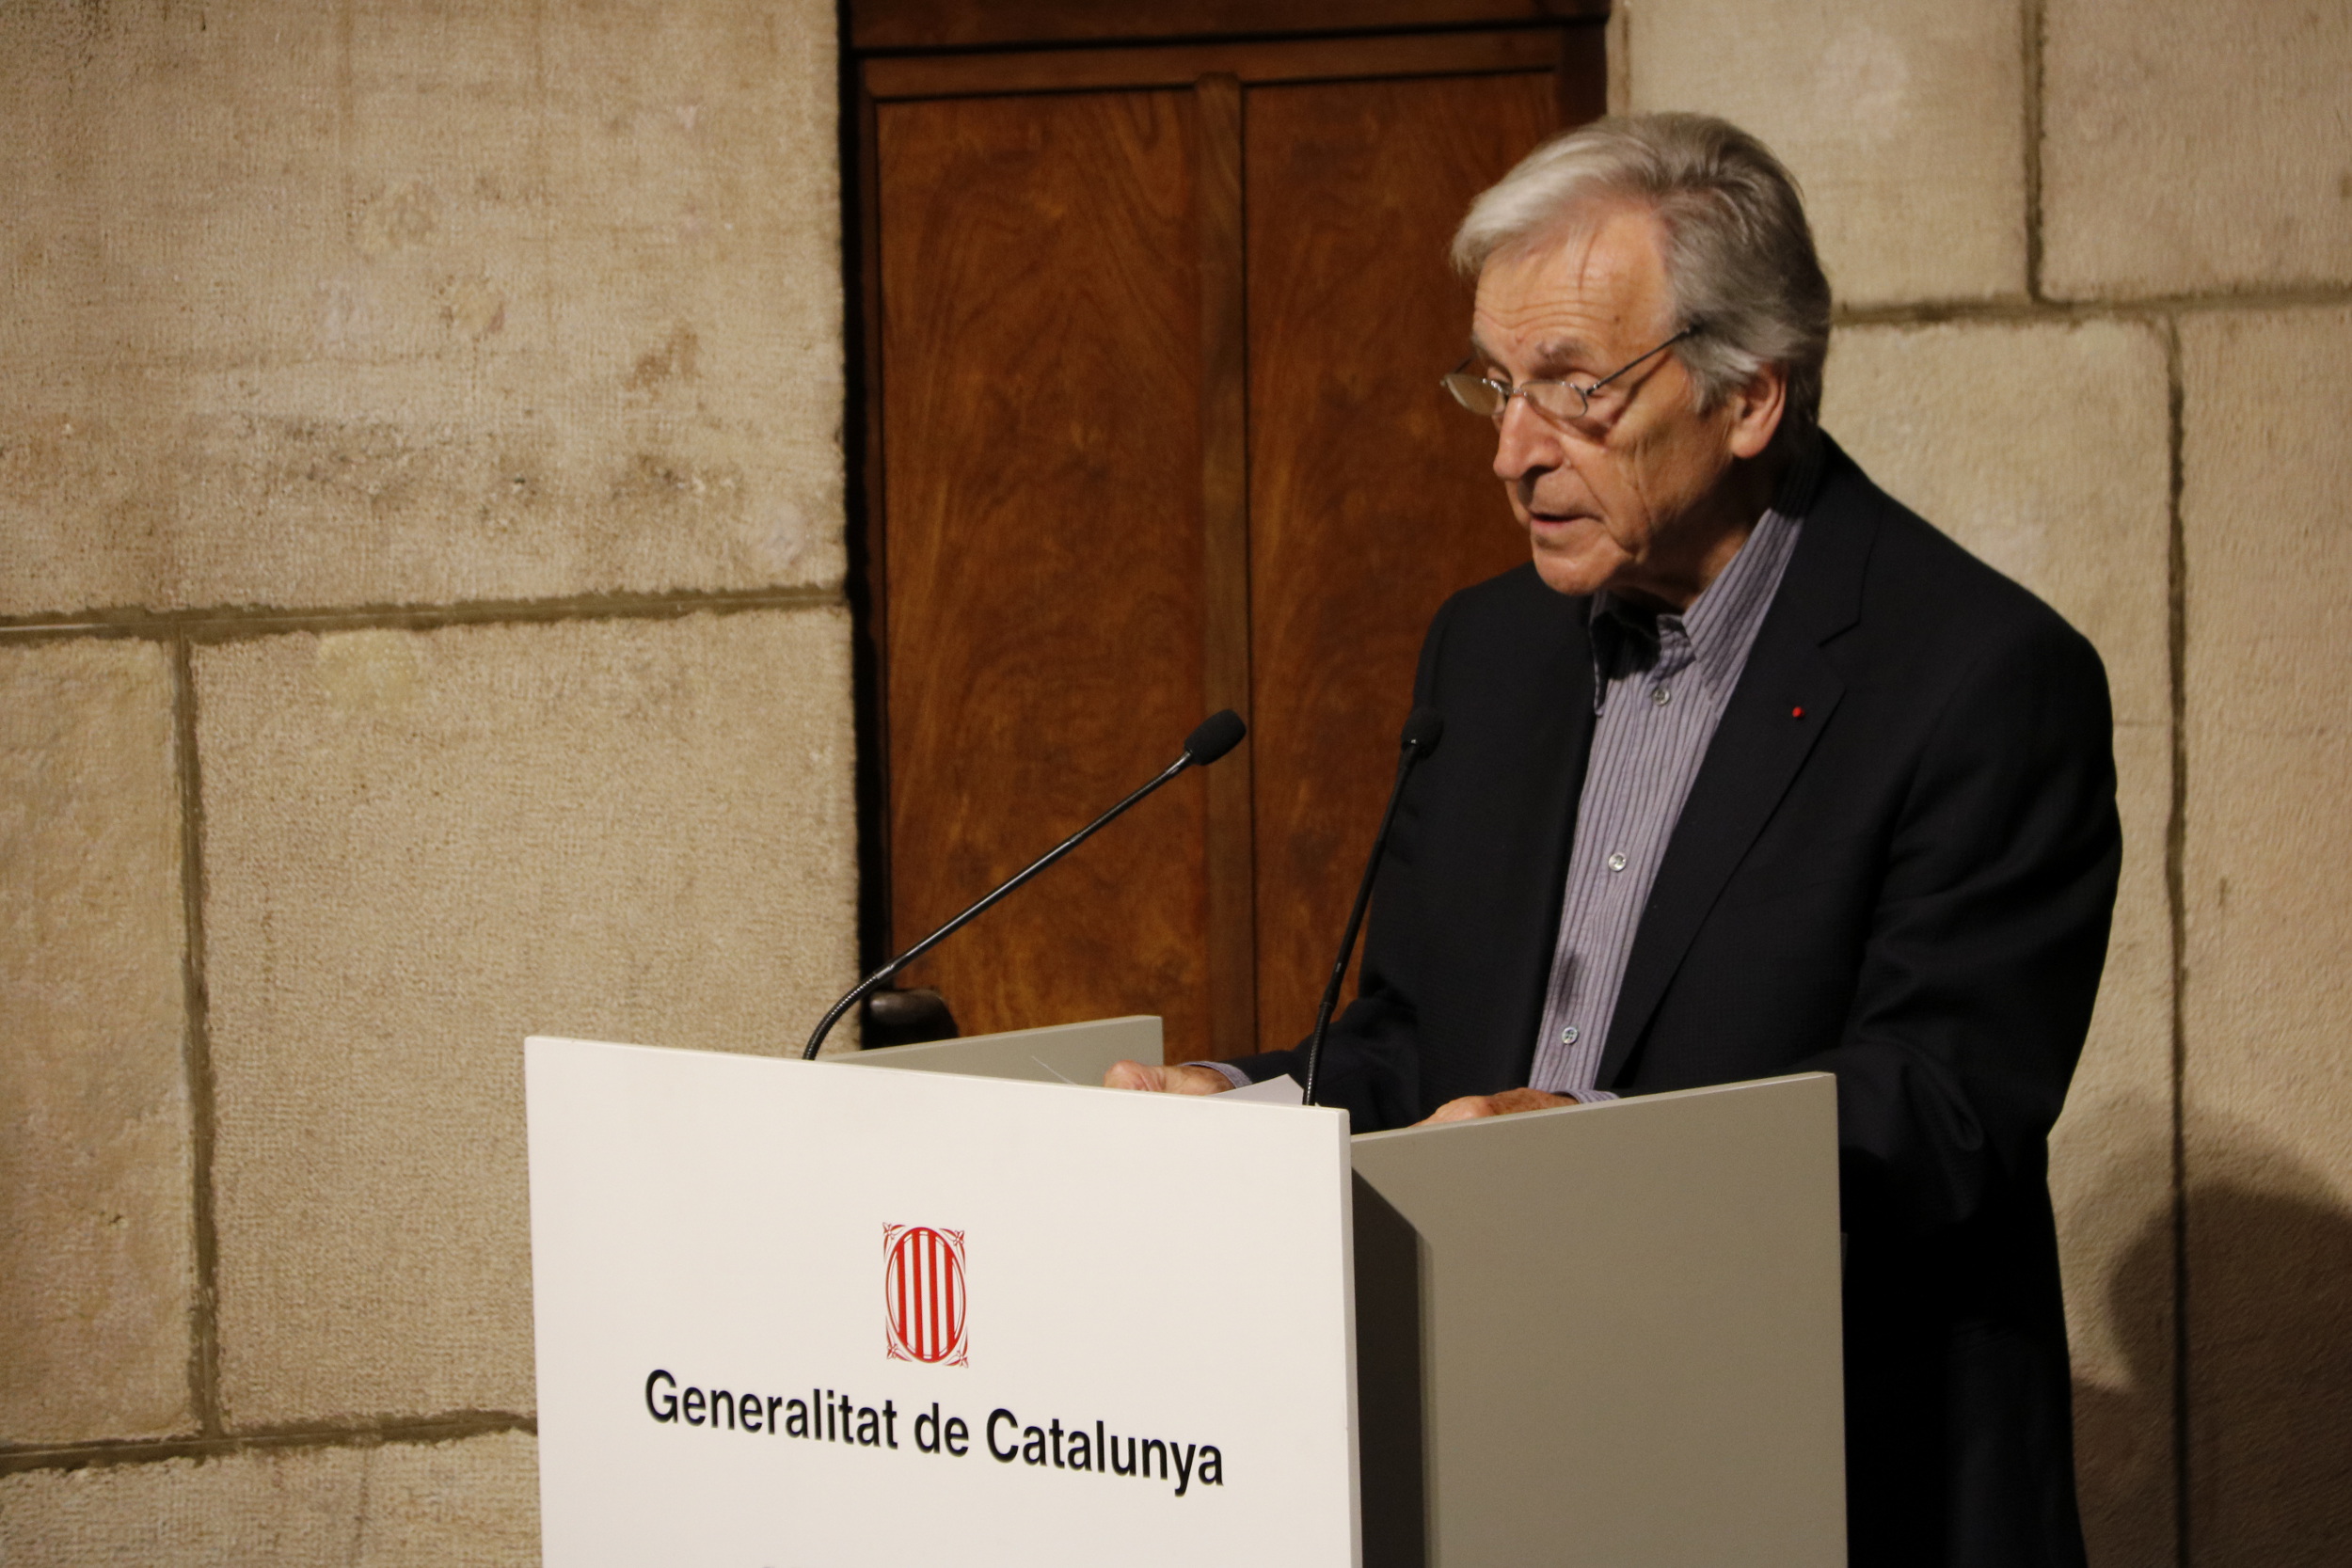 Costa-Gavras awarded the Catalonia International Prize